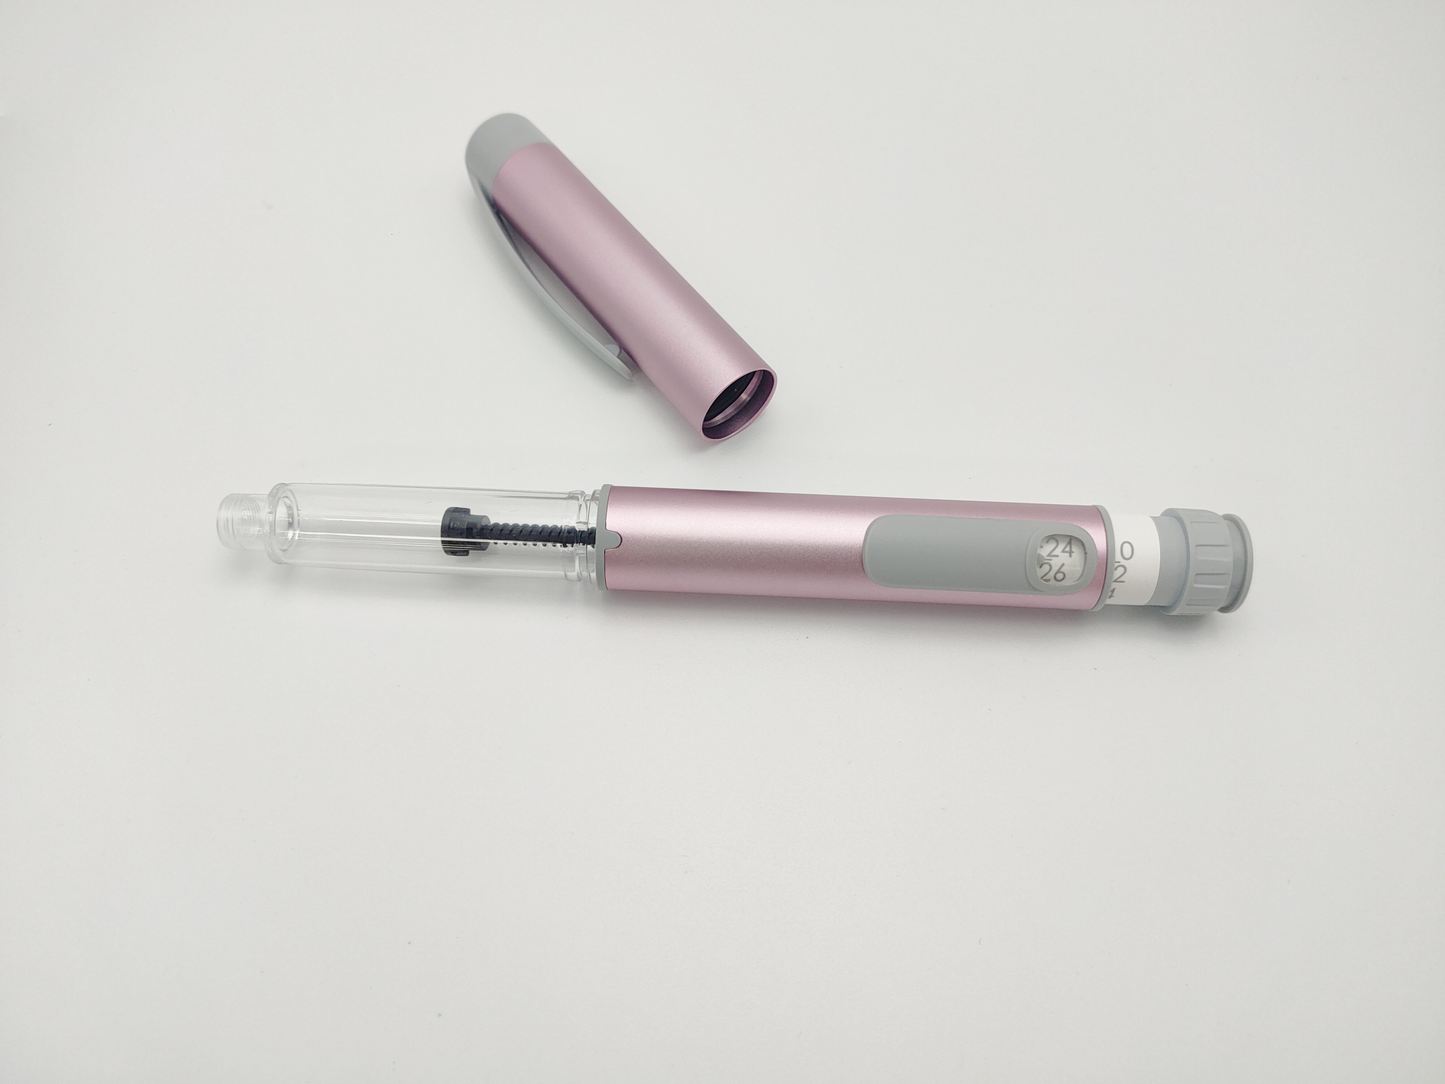 Metal insulin pen for diabetes